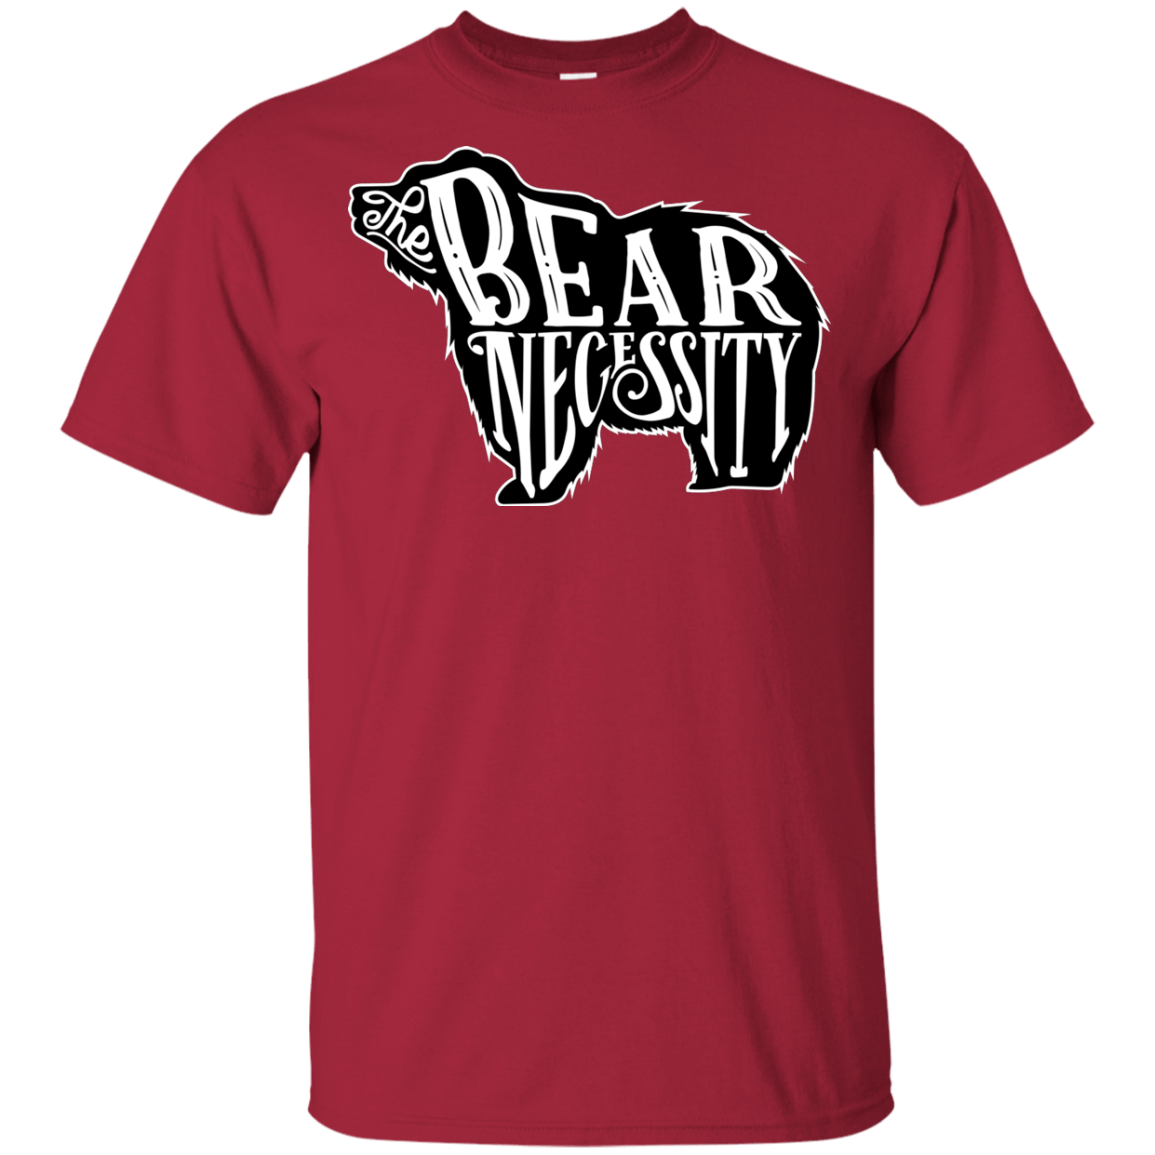 The Bear Necessity Youth T-Shirt